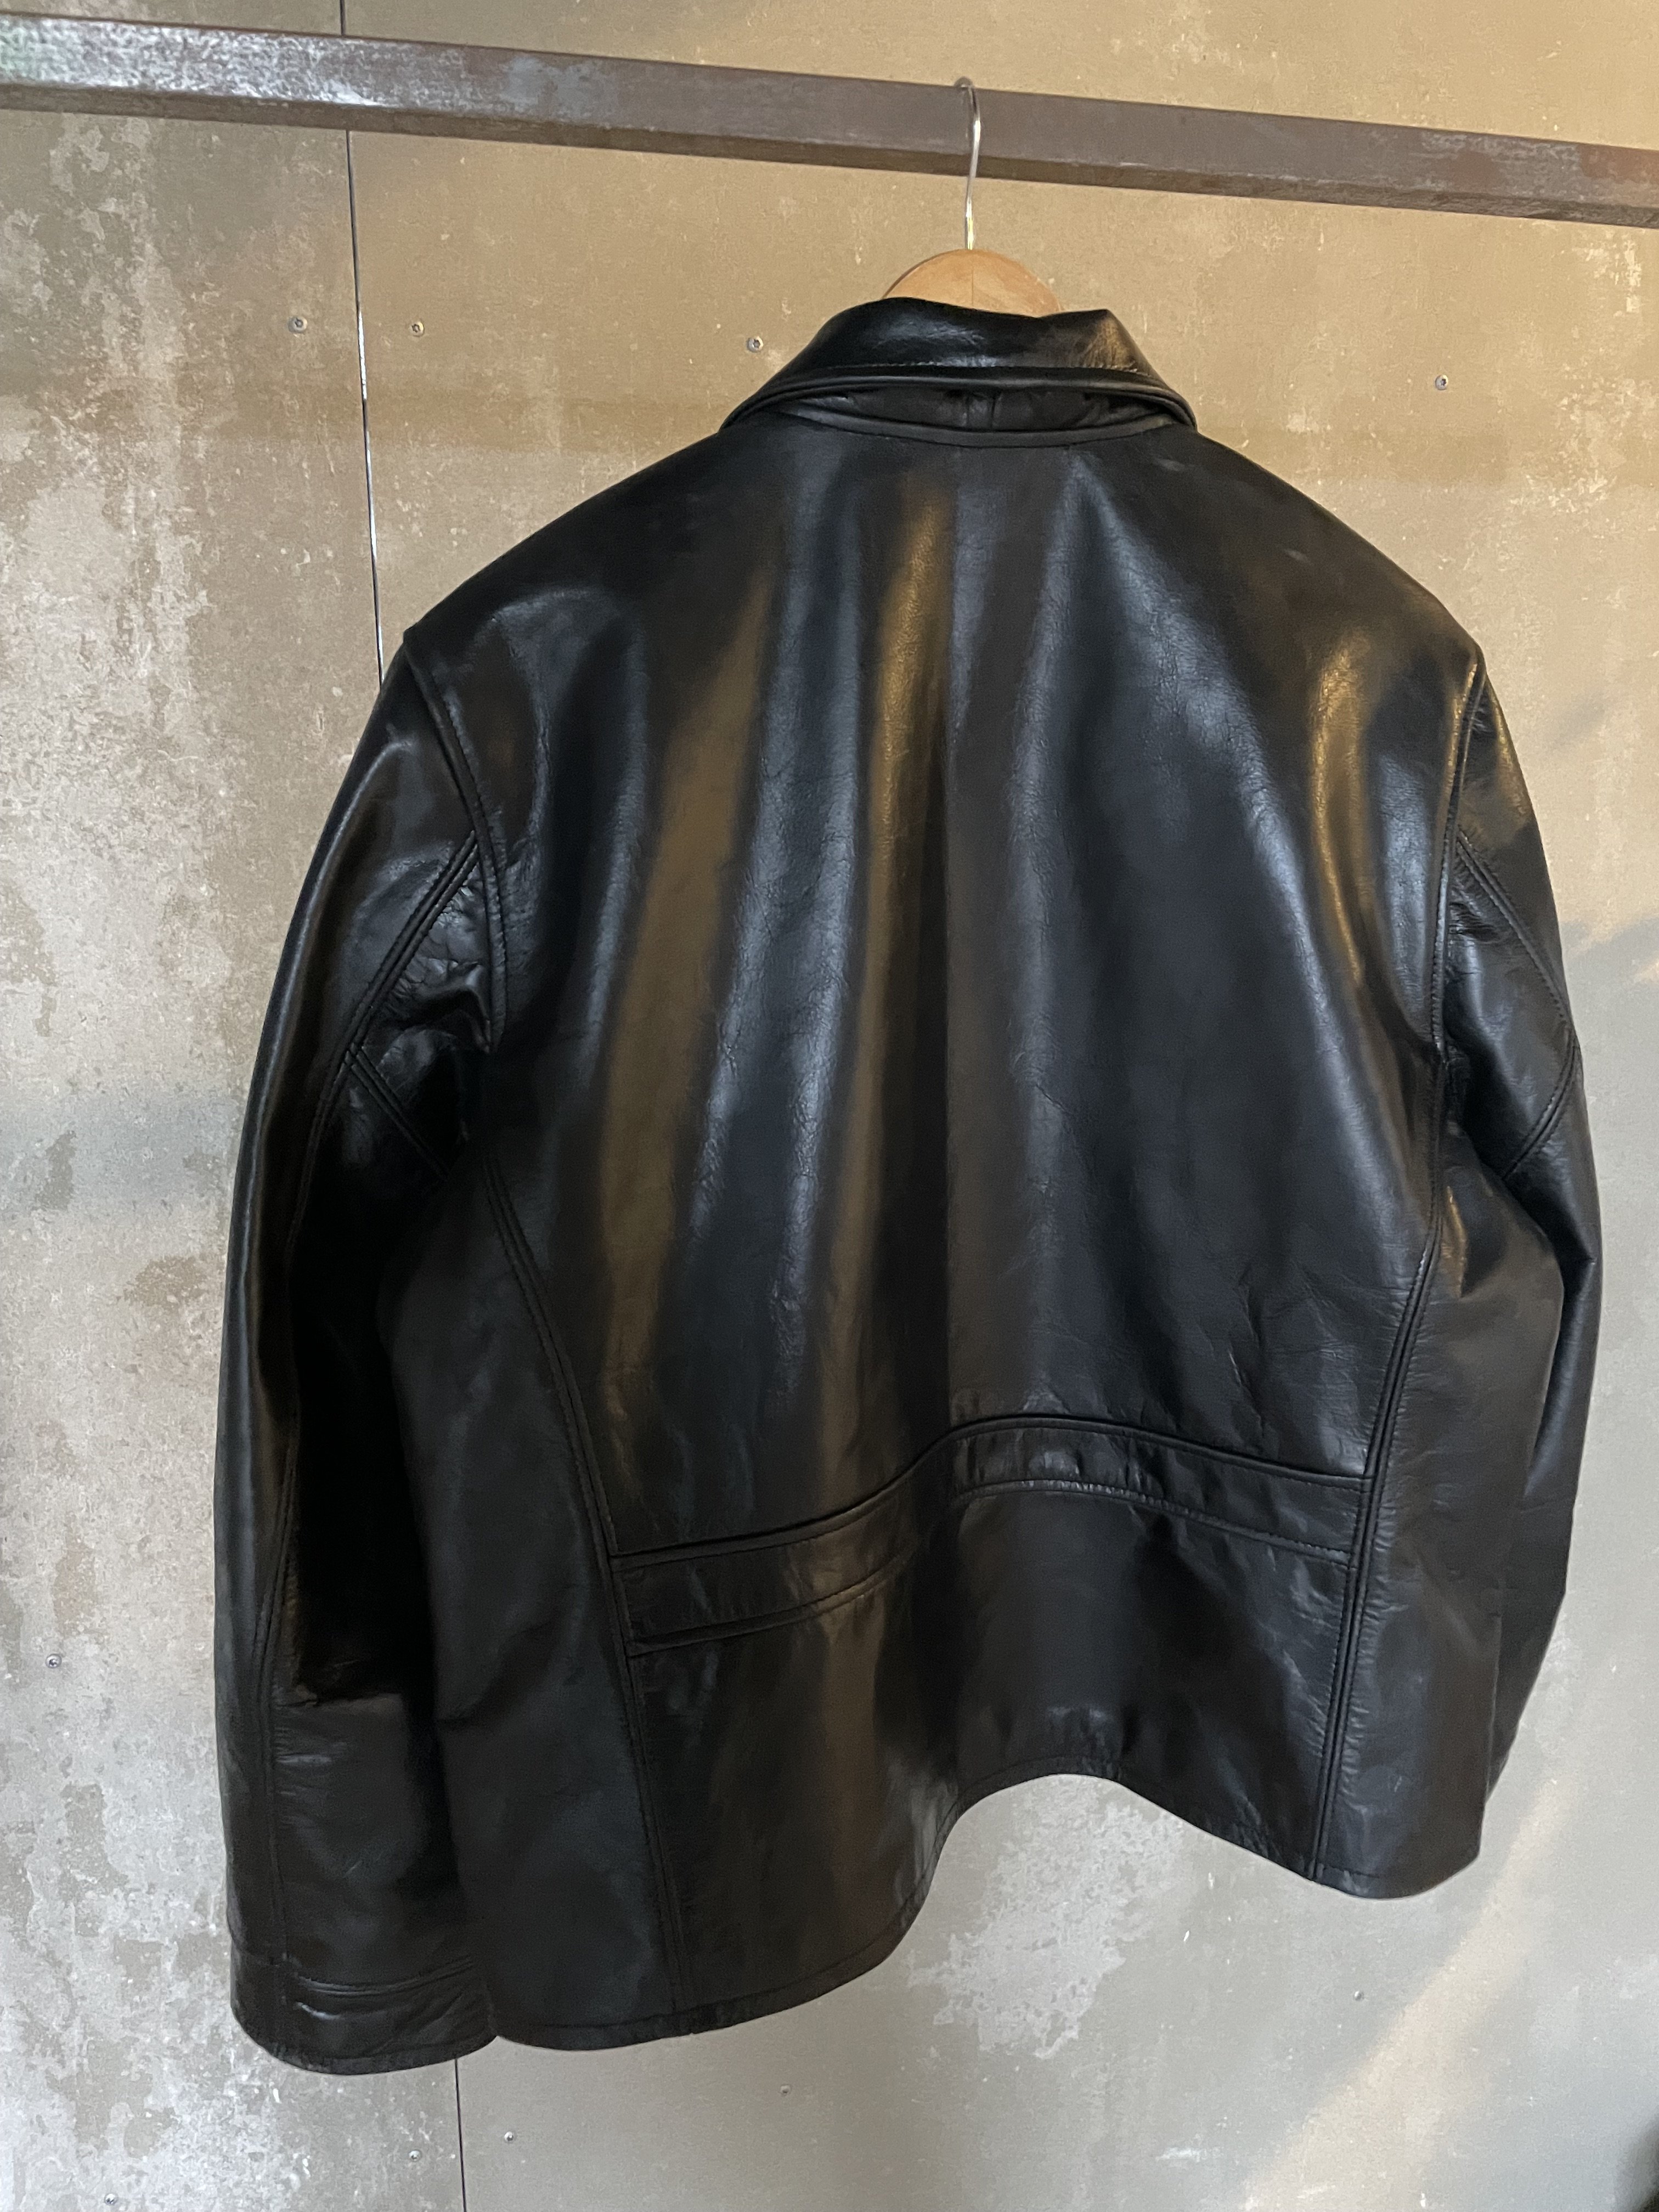 D-Pocket Fur Collar Jacket - Horsehide Leather - AVI LEATHER